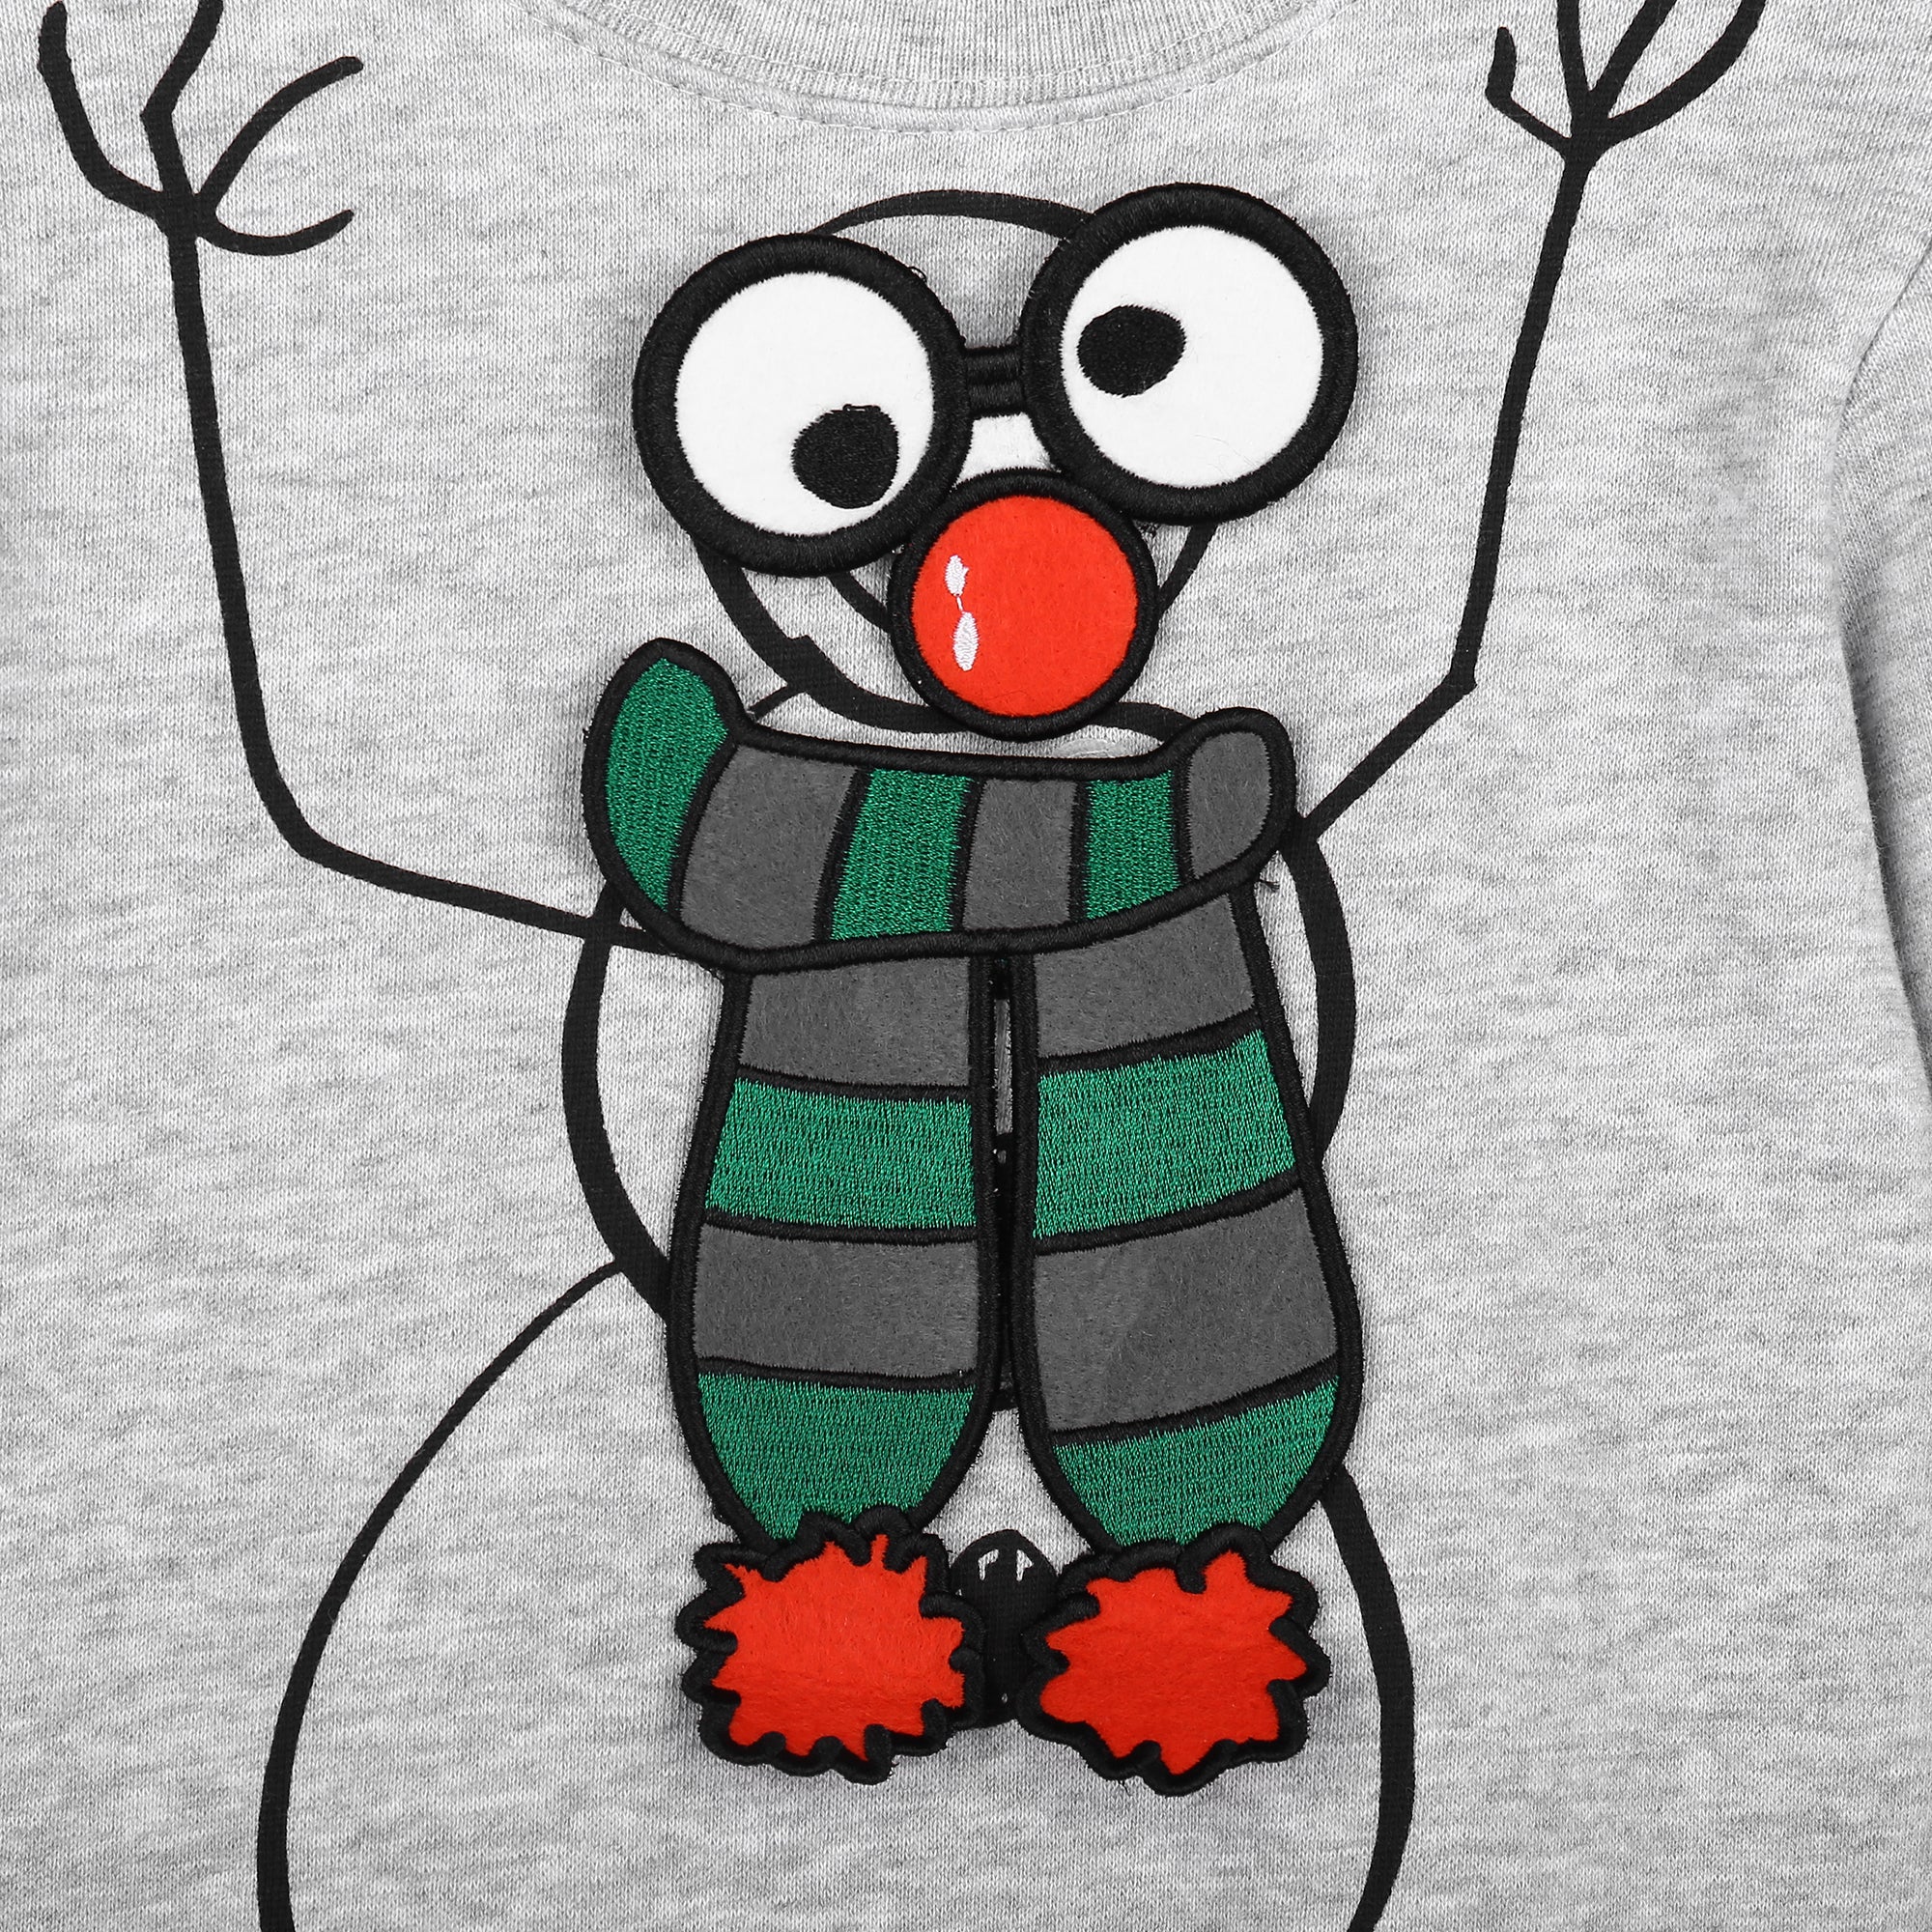 Boys Grey Snowman Cotton Sweatshirt